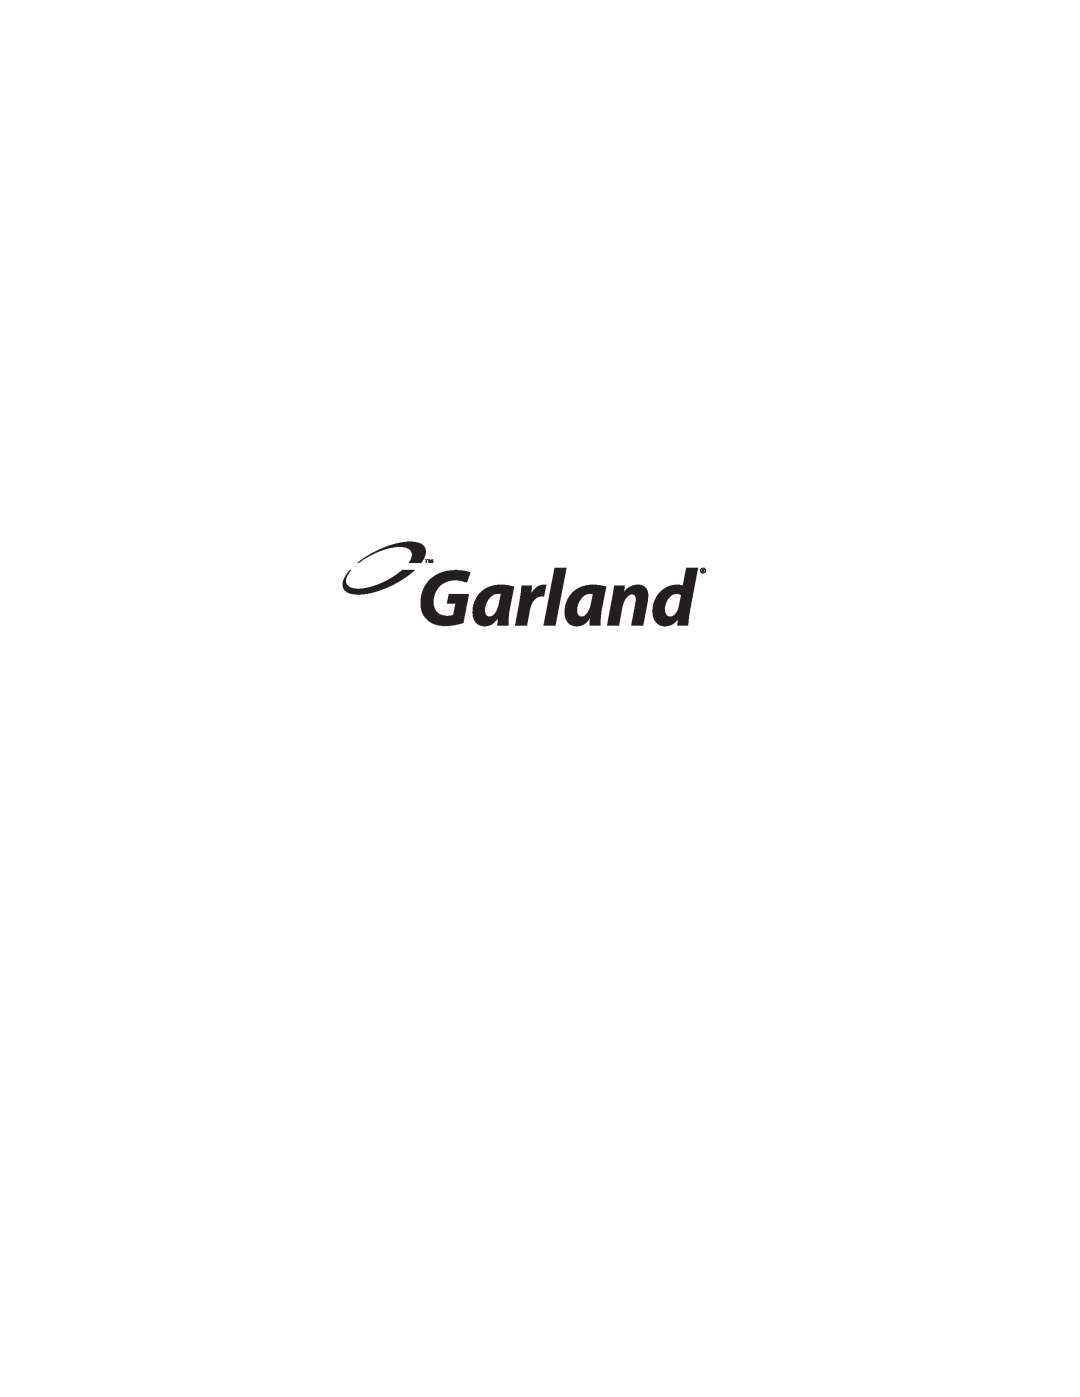 Garland CG-24, CG-36, CG-48, CG-72, CG-60 service manual 